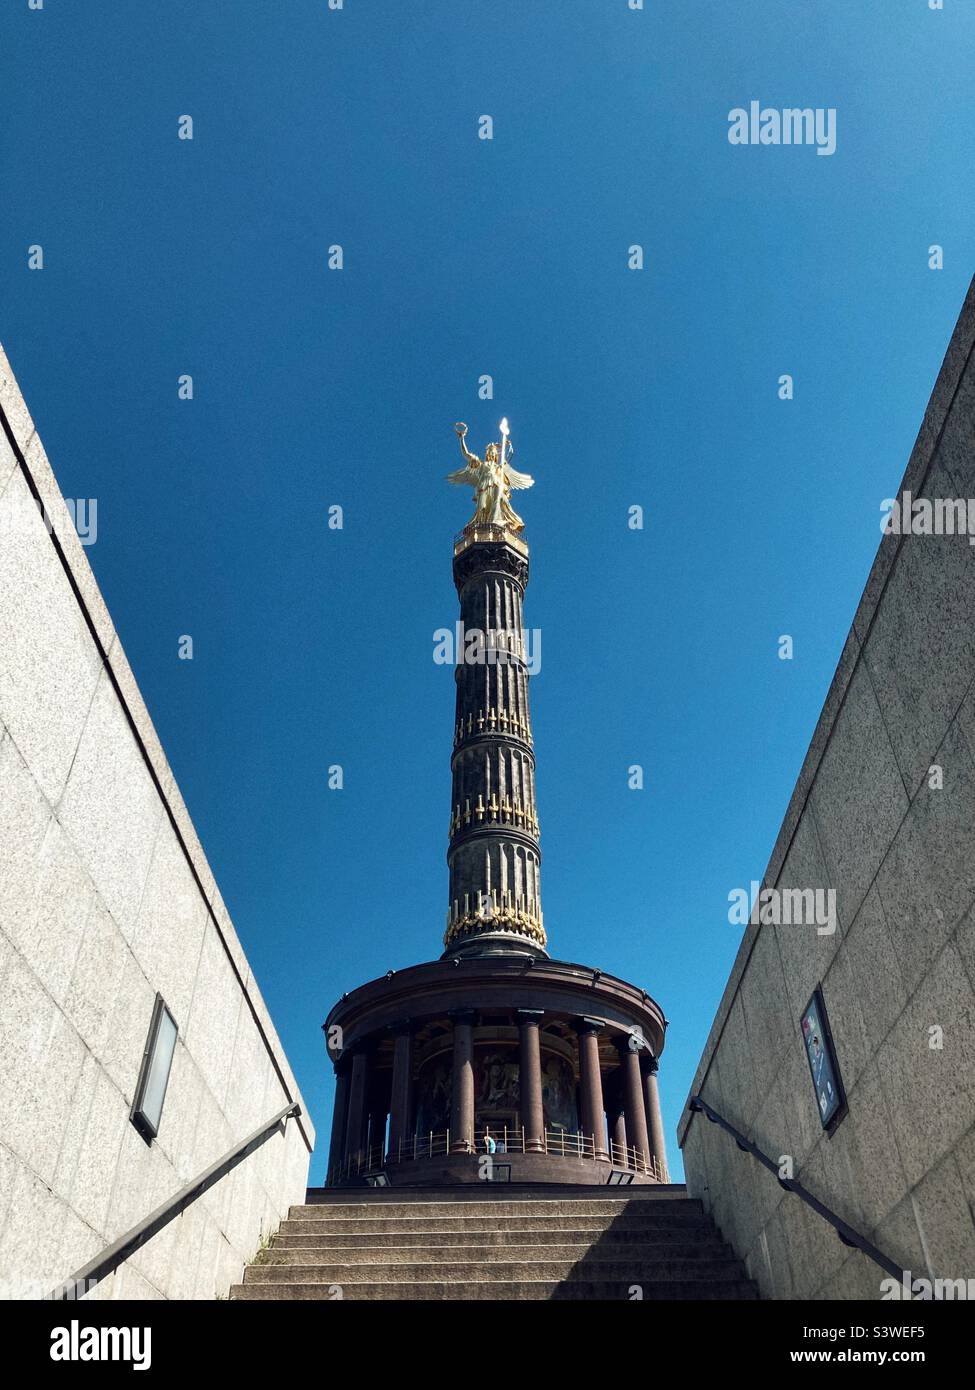 Siegessäule (Victory column), Berlin, Germany Stock Photo